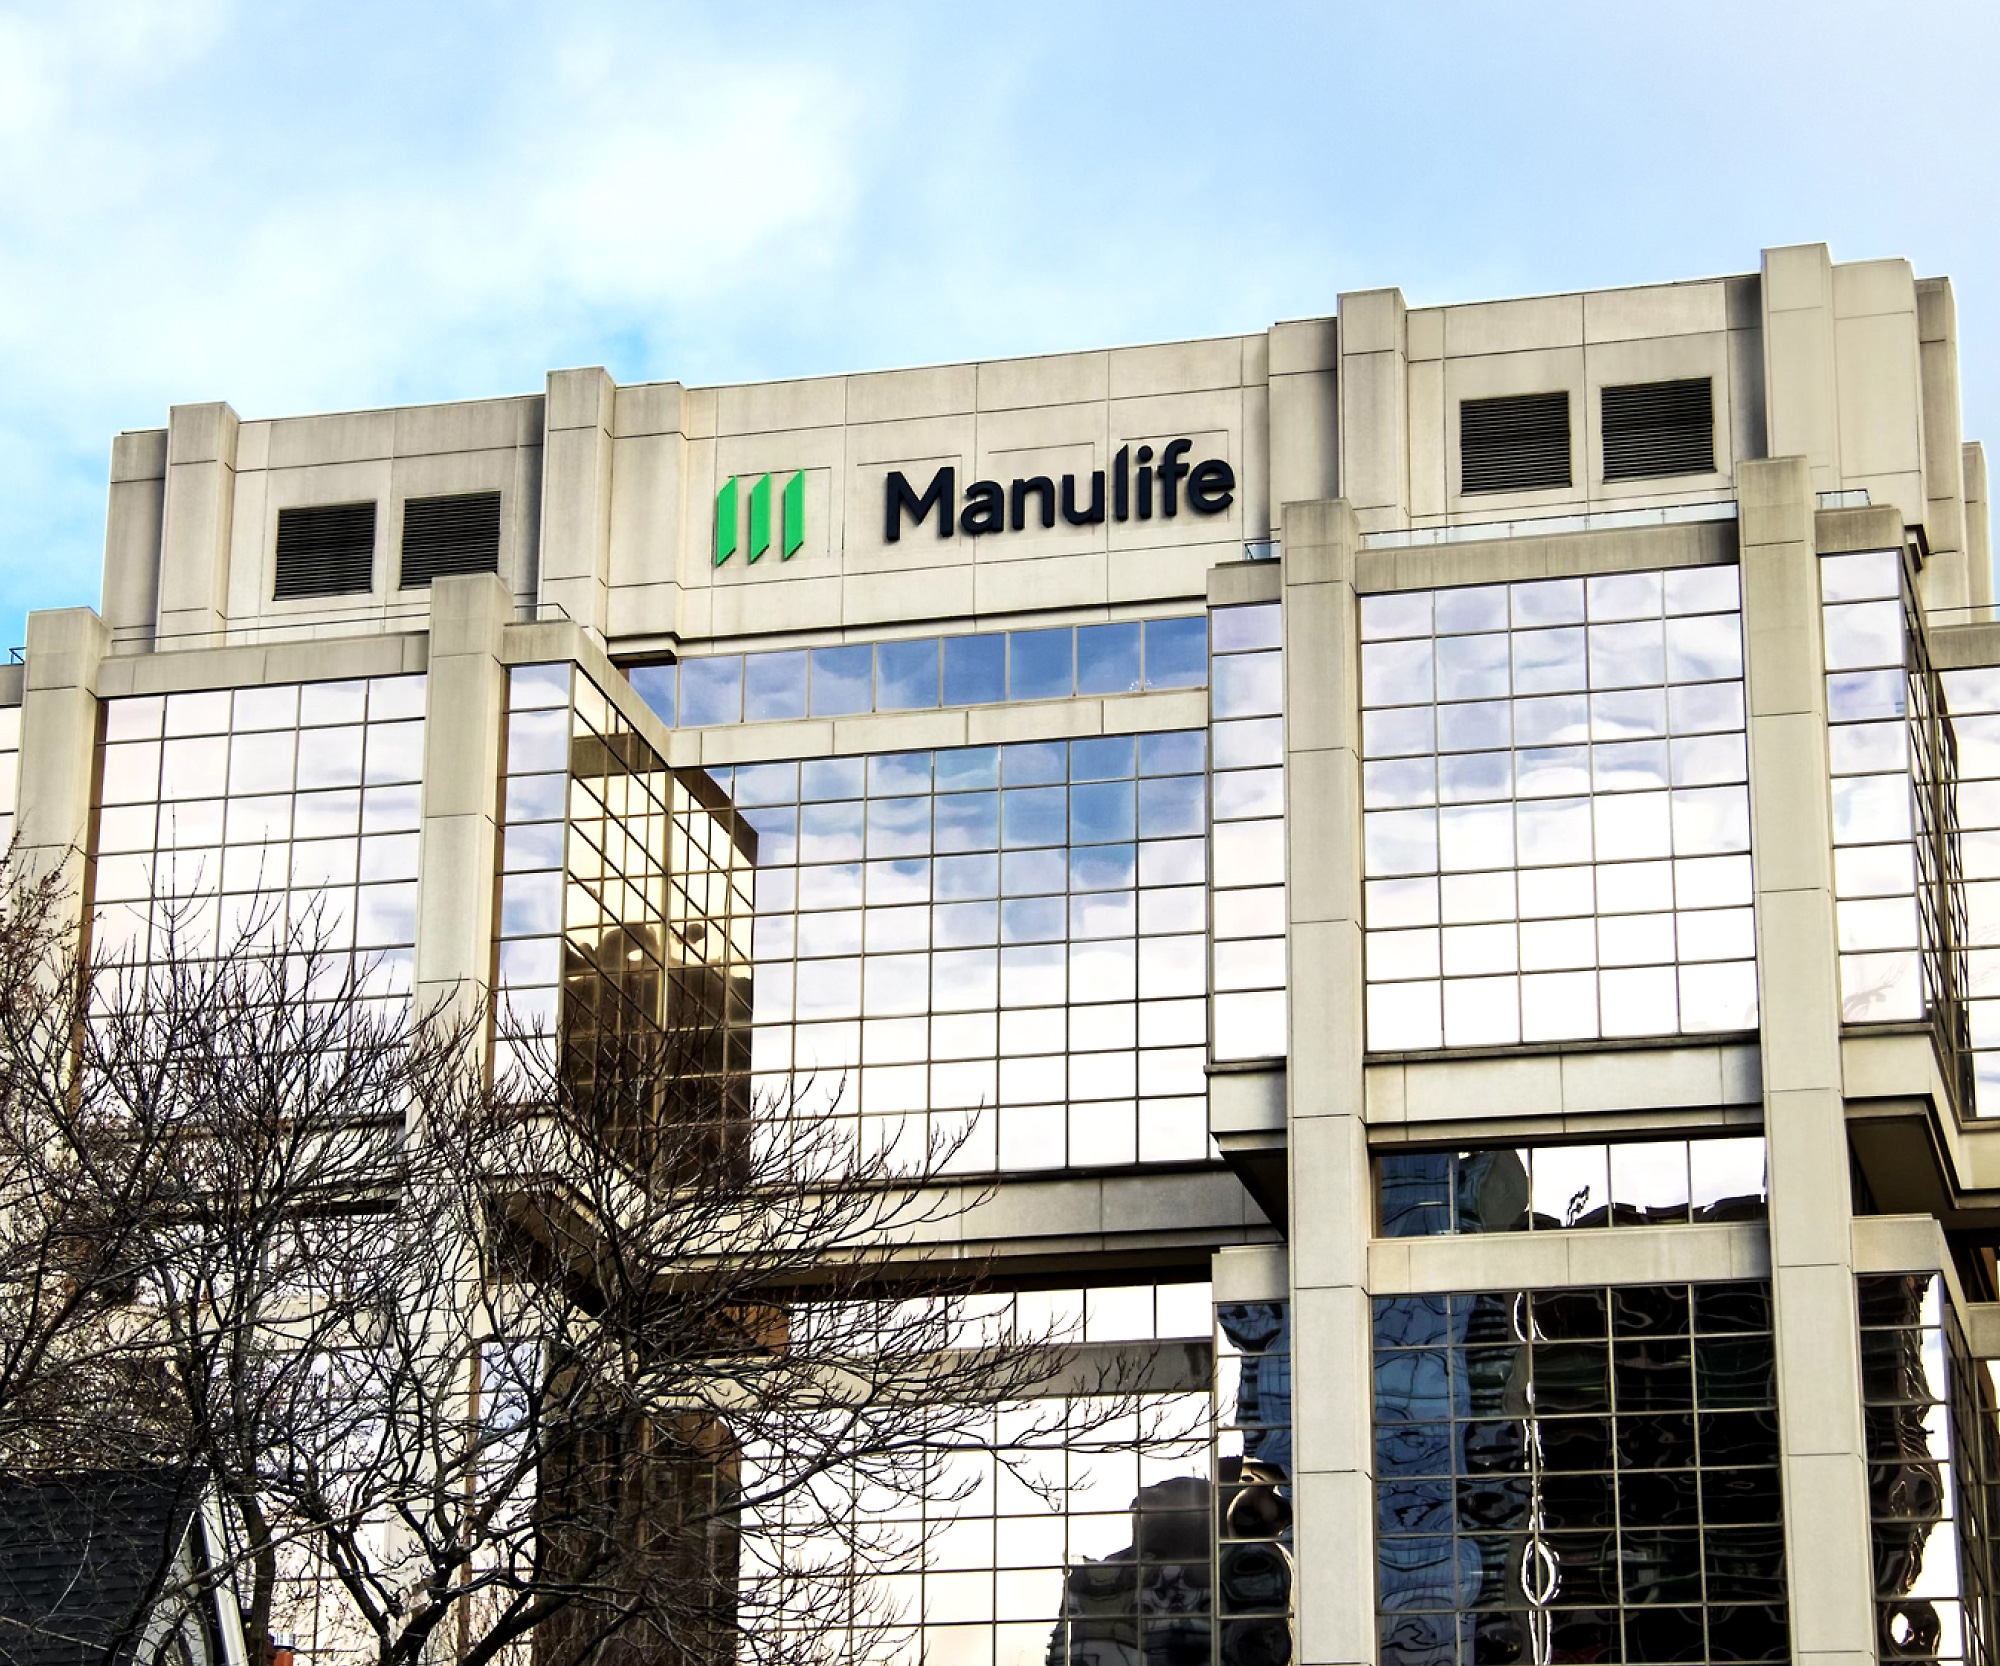 En bygning med Manulife-logoen